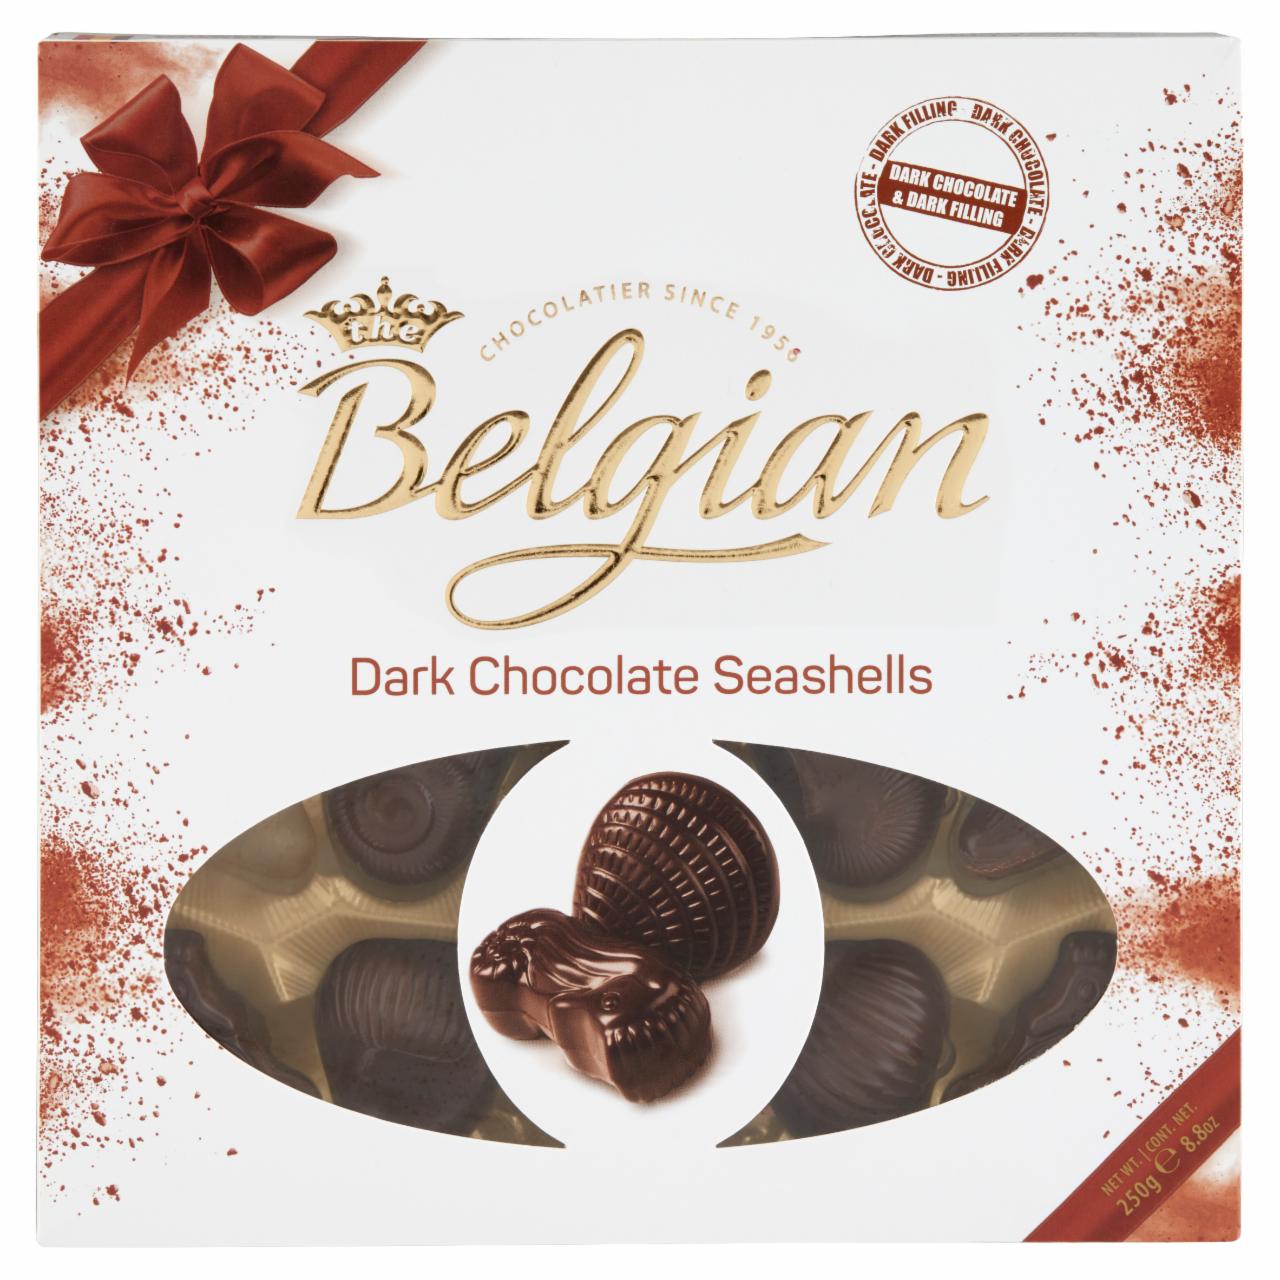 Képek - Belgian Dark Chocolate Seashells belga csokoládé praliné 250 g